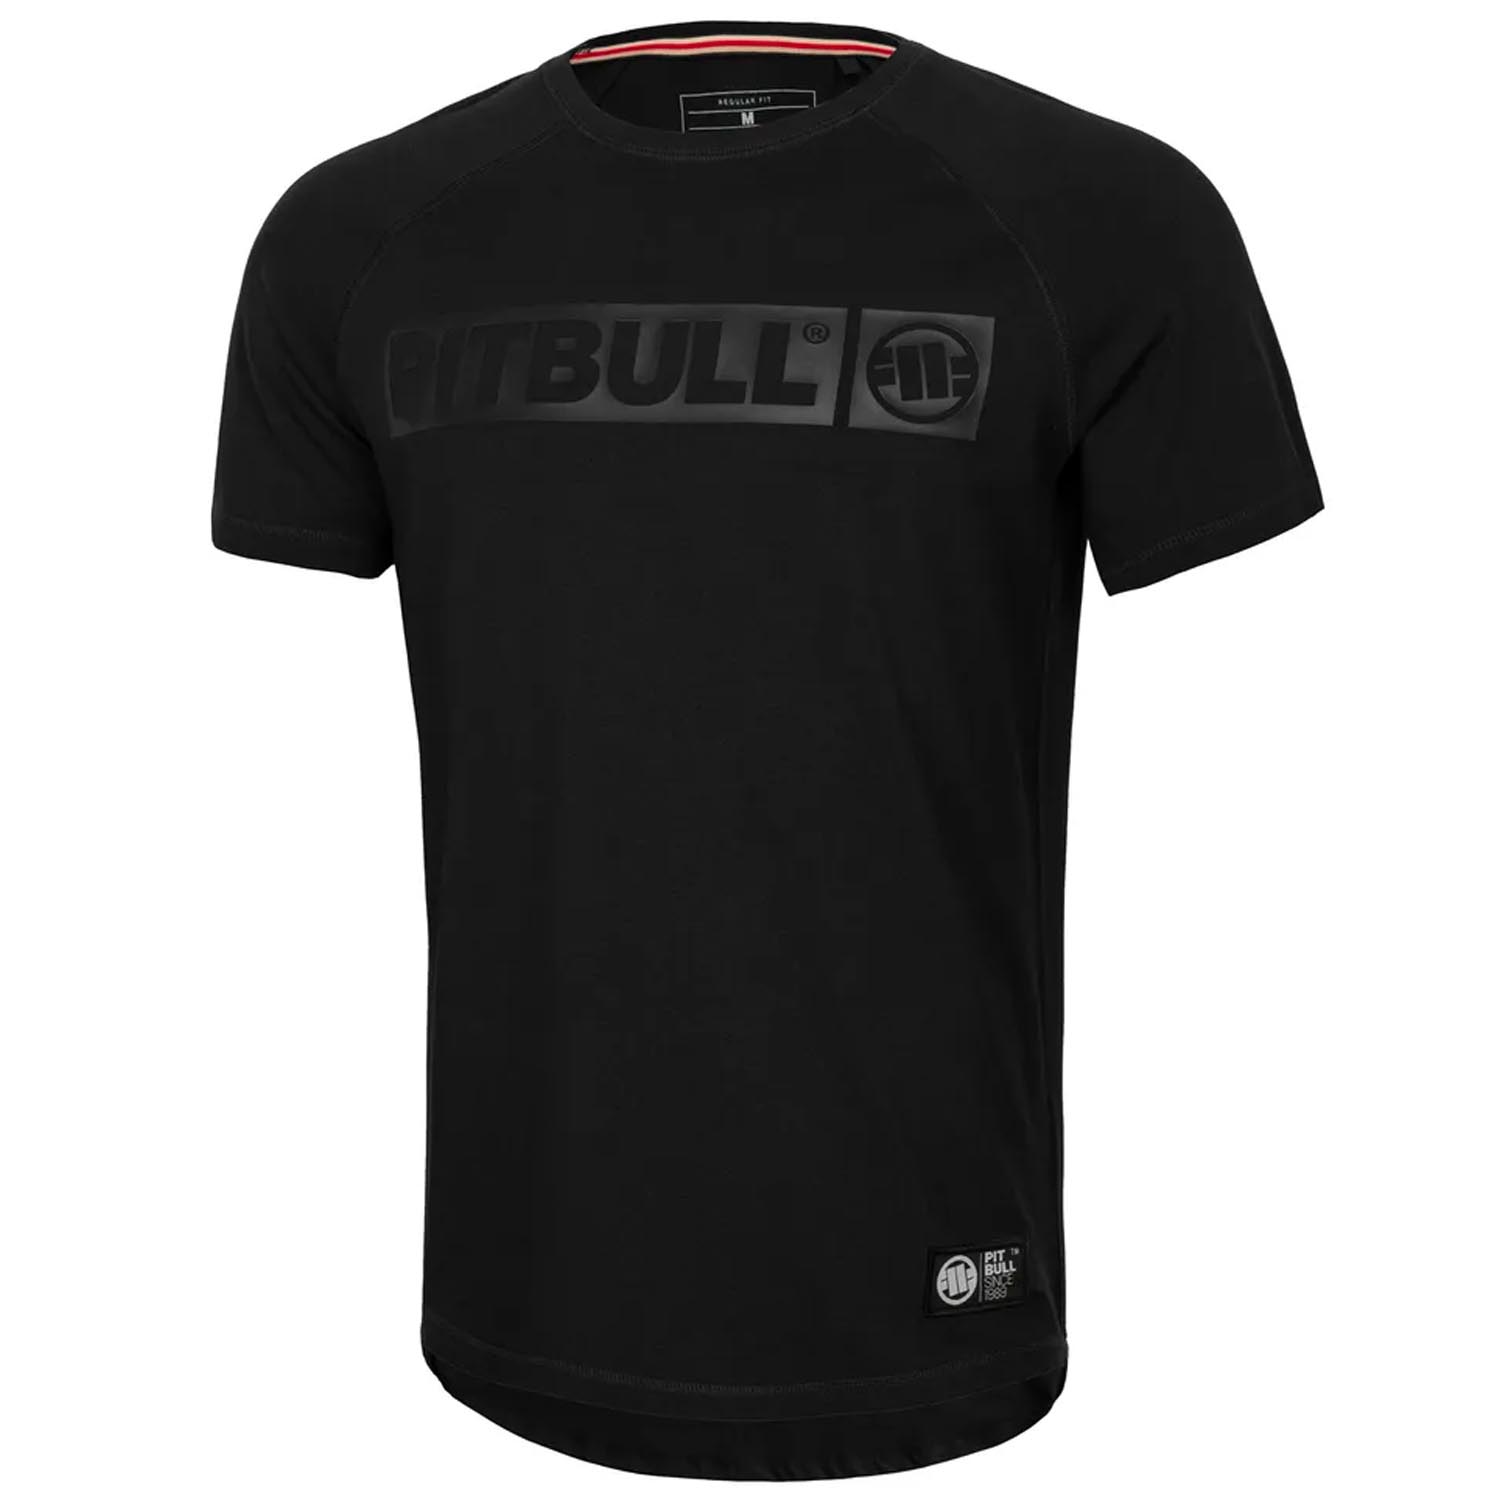 Pit Bull West Coast T-Shirt, Hilltop 210 Spandex, black-black, XXXL